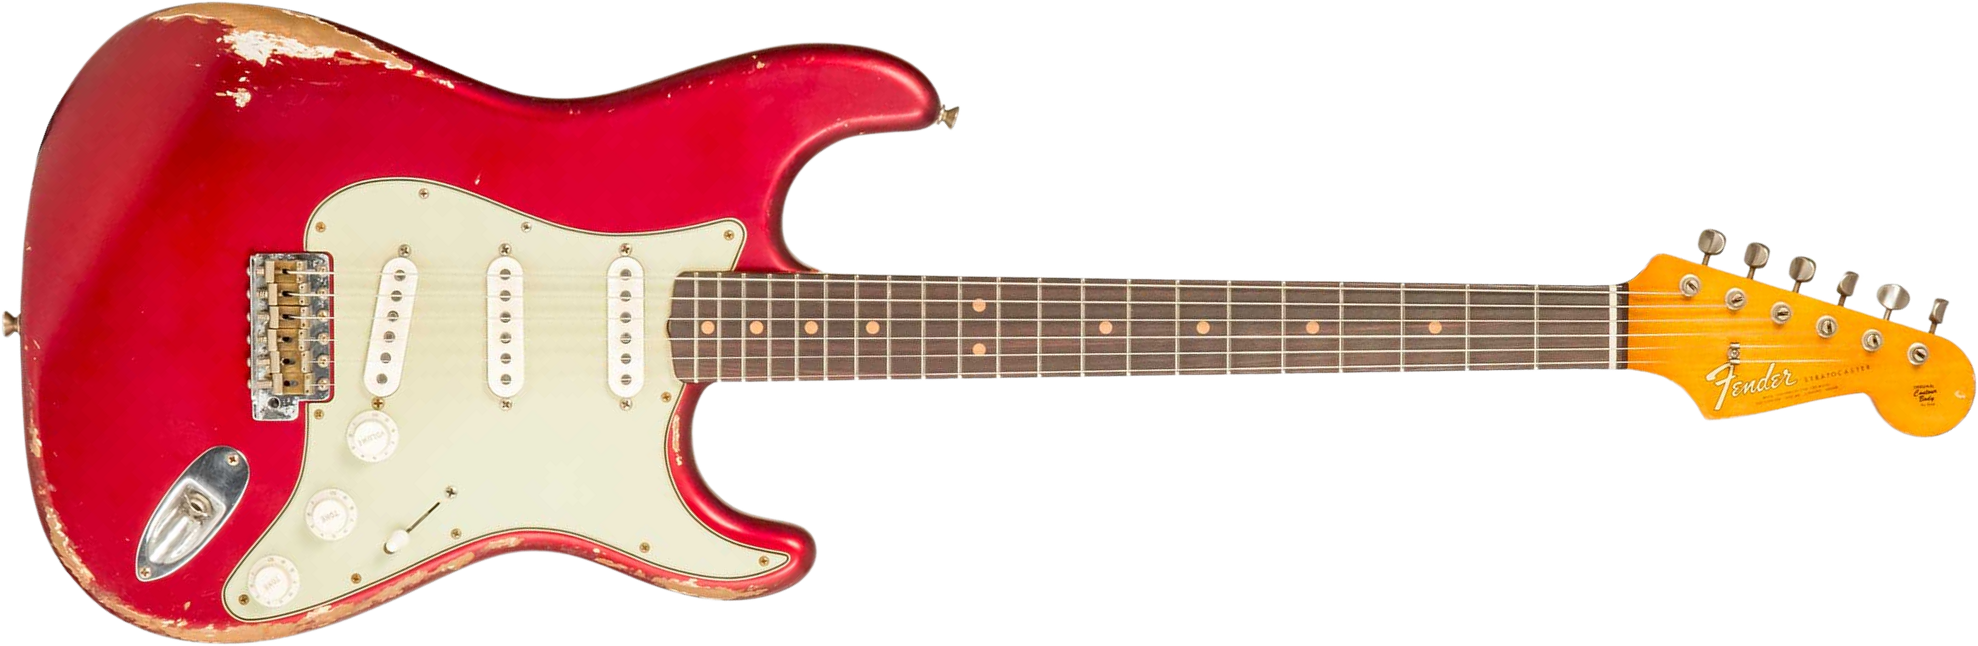 Fender Custom Shop Strat 1964 Masterbuilt P.waller 3s Trem Rw #r129130 - Heavy Relic Candy Apple Red - Elektrische gitaar in Str-vorm - Main picture